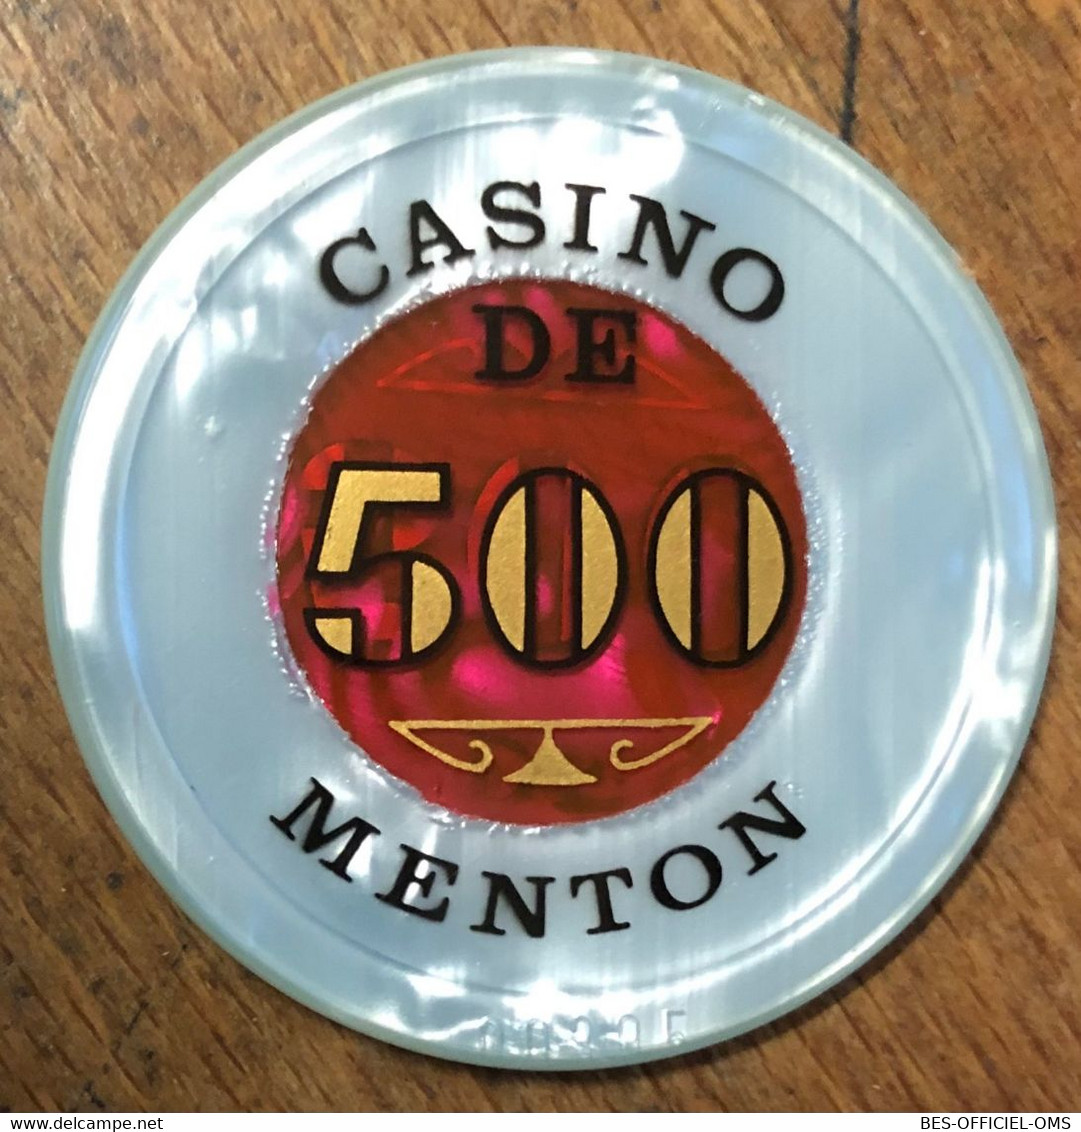 06 MENTON CASINO JETON DE 500 FRANCS N° 00305 CHIP COINS TOKENS GAMING - Casino